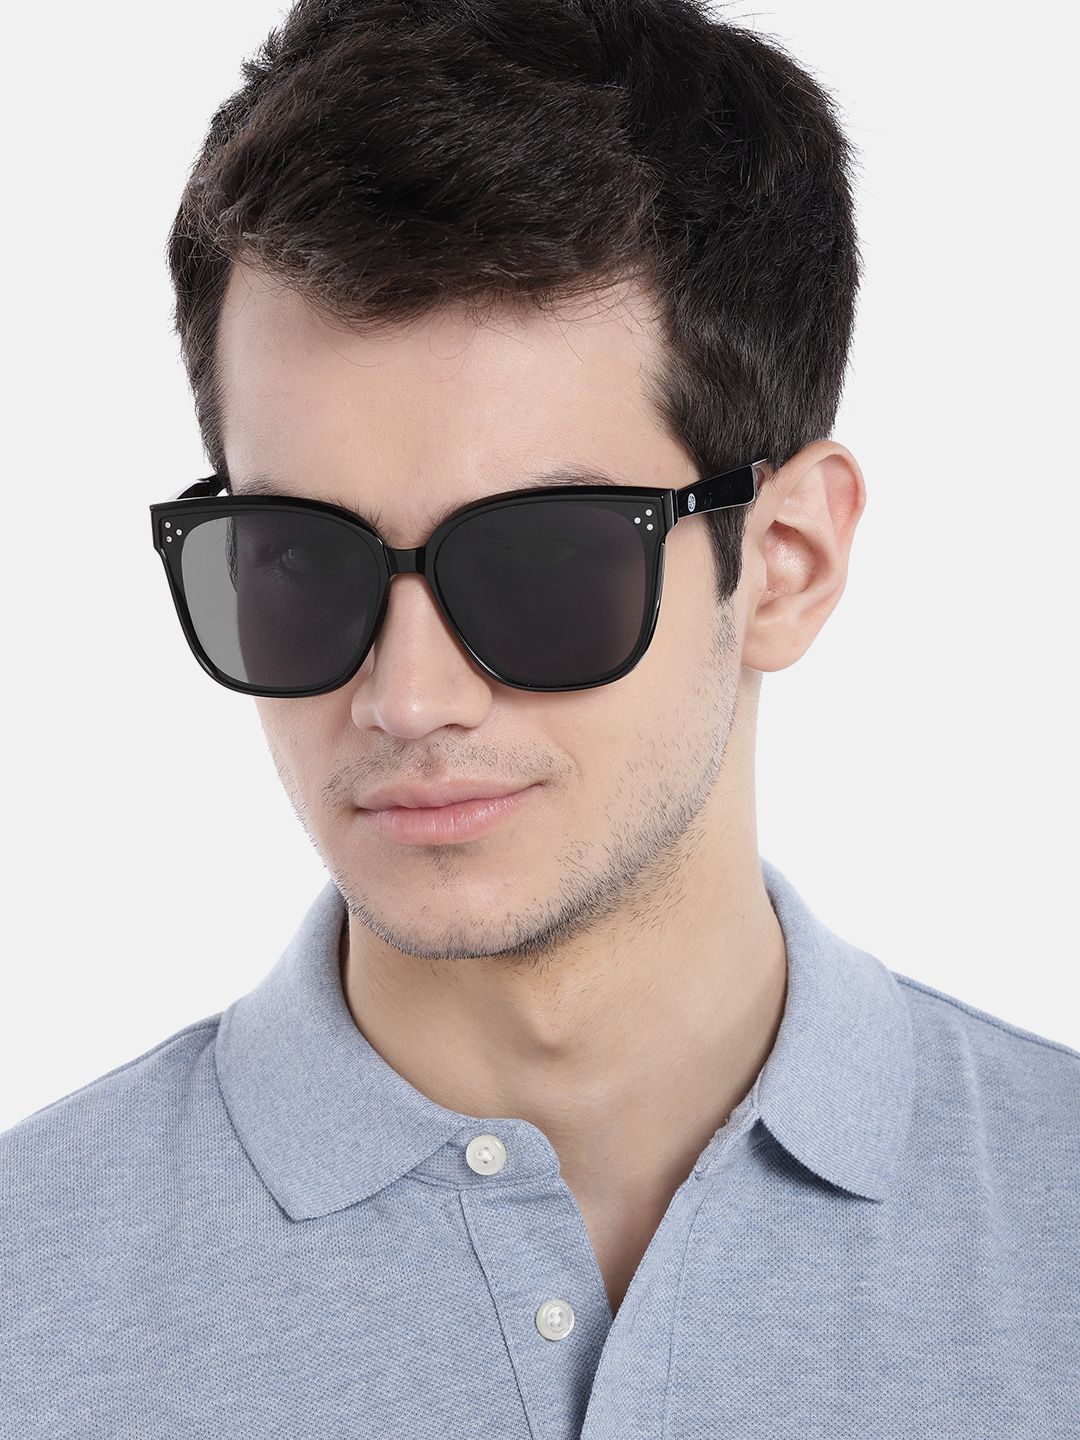 Carlton London Unisex Black Lens & Black Cateye Sunglasses CLSU024 Price in India